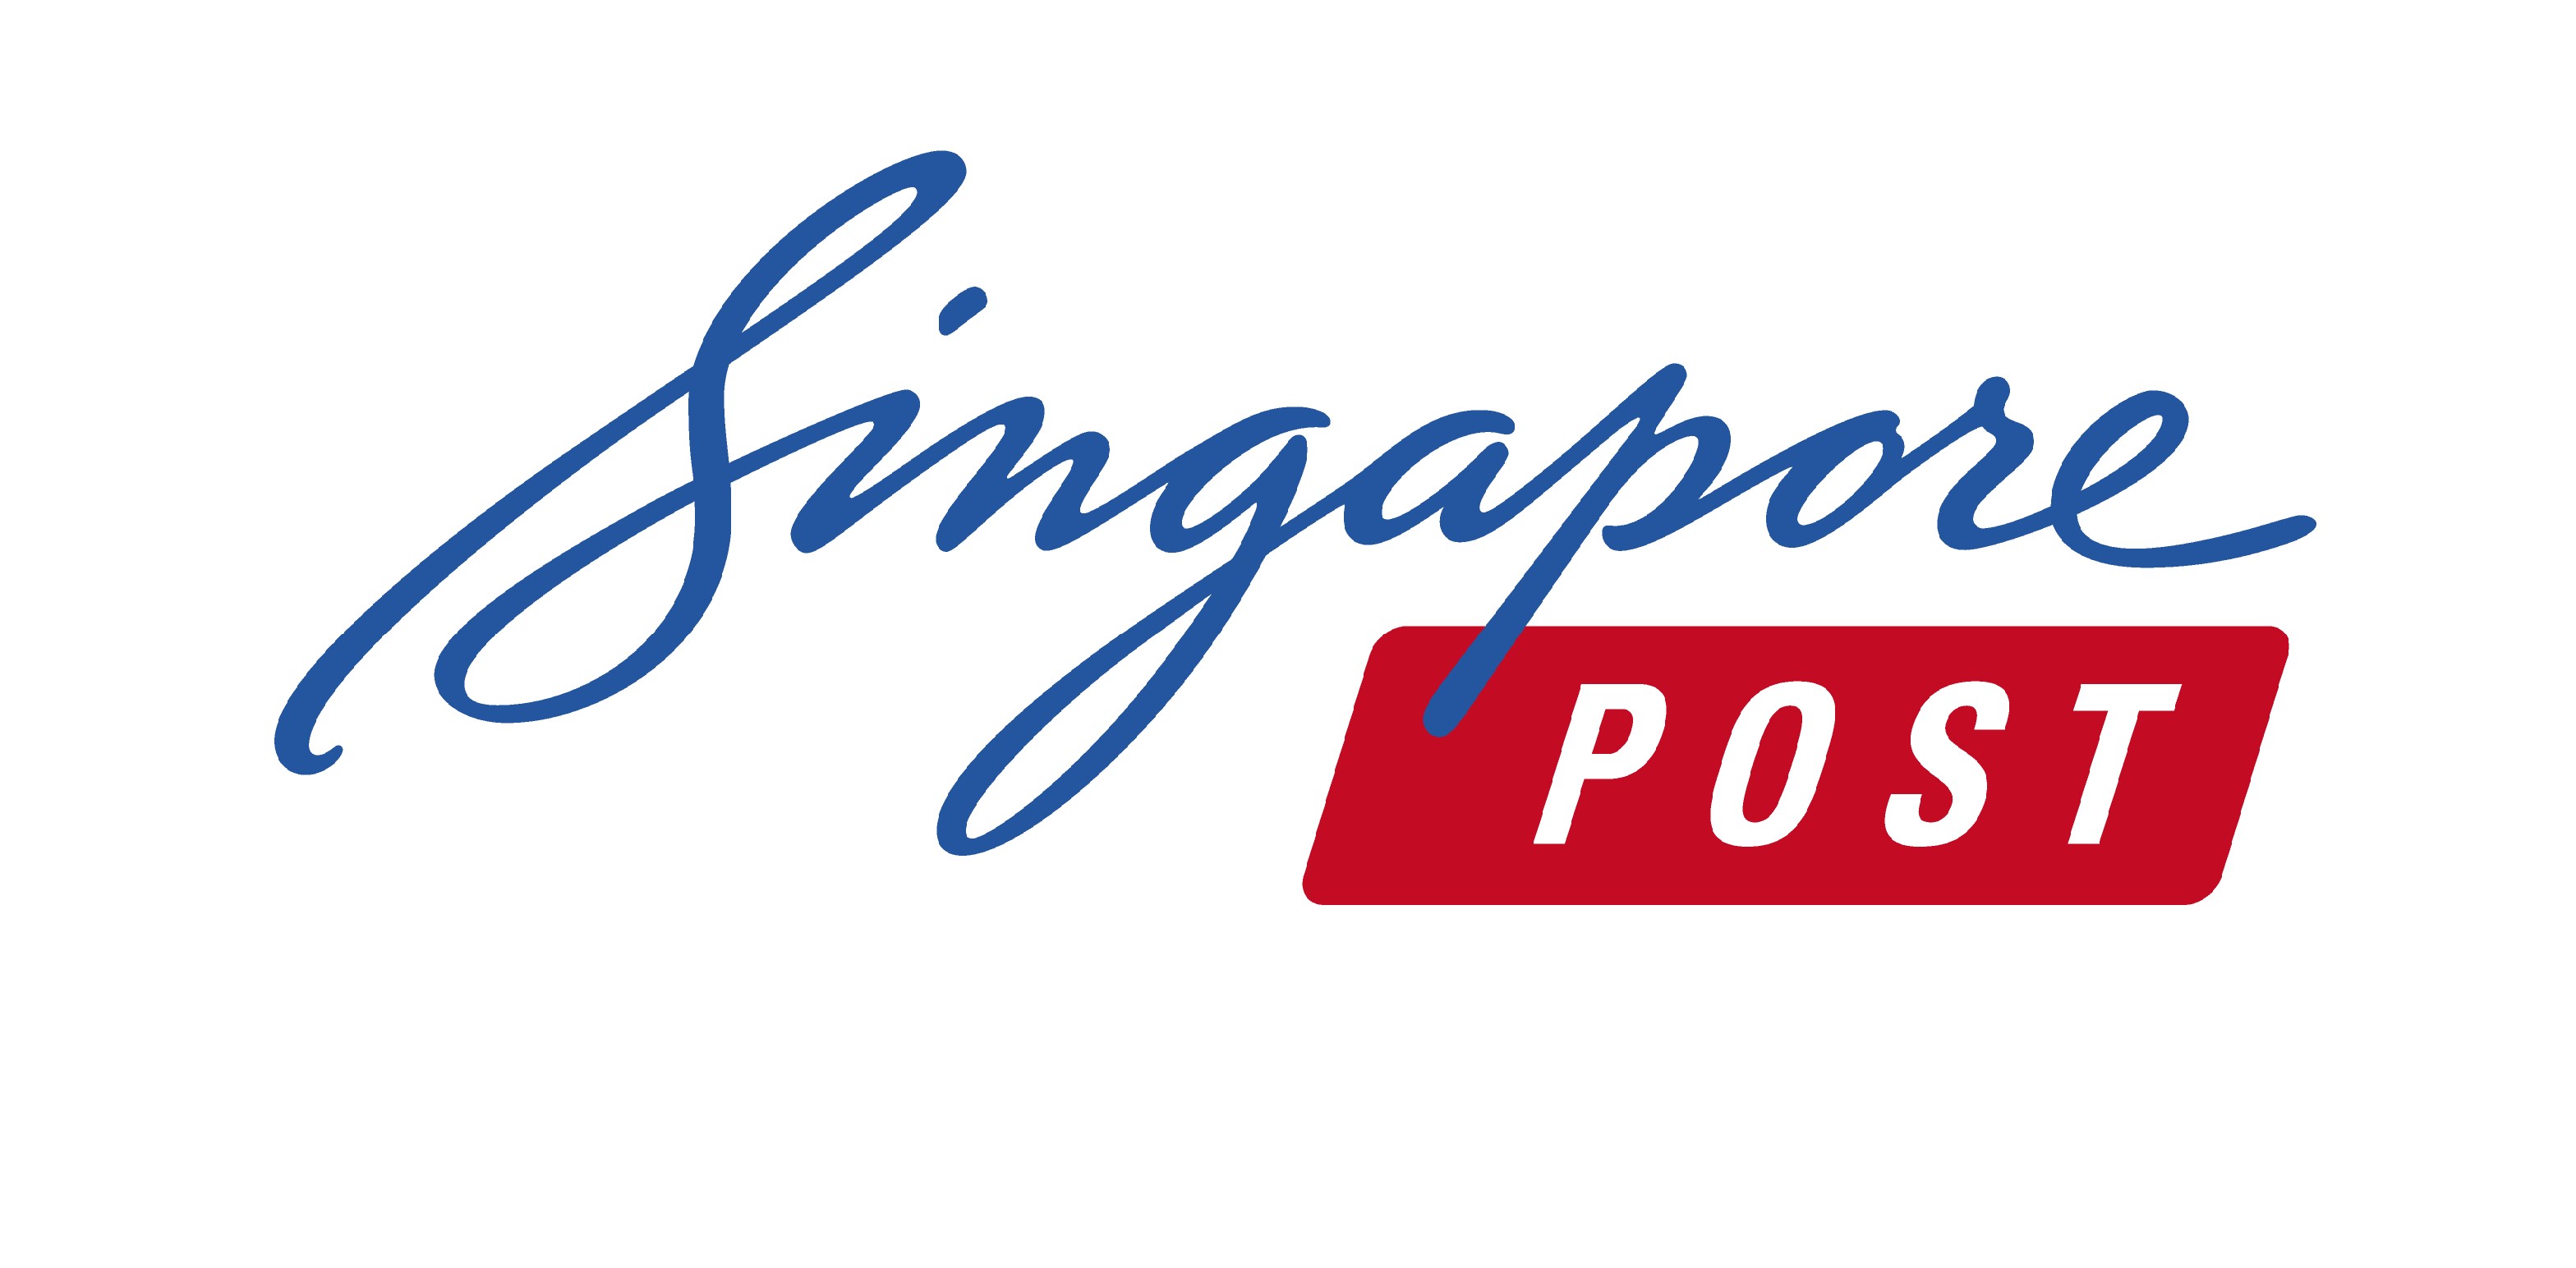 Singapore Post Ltd